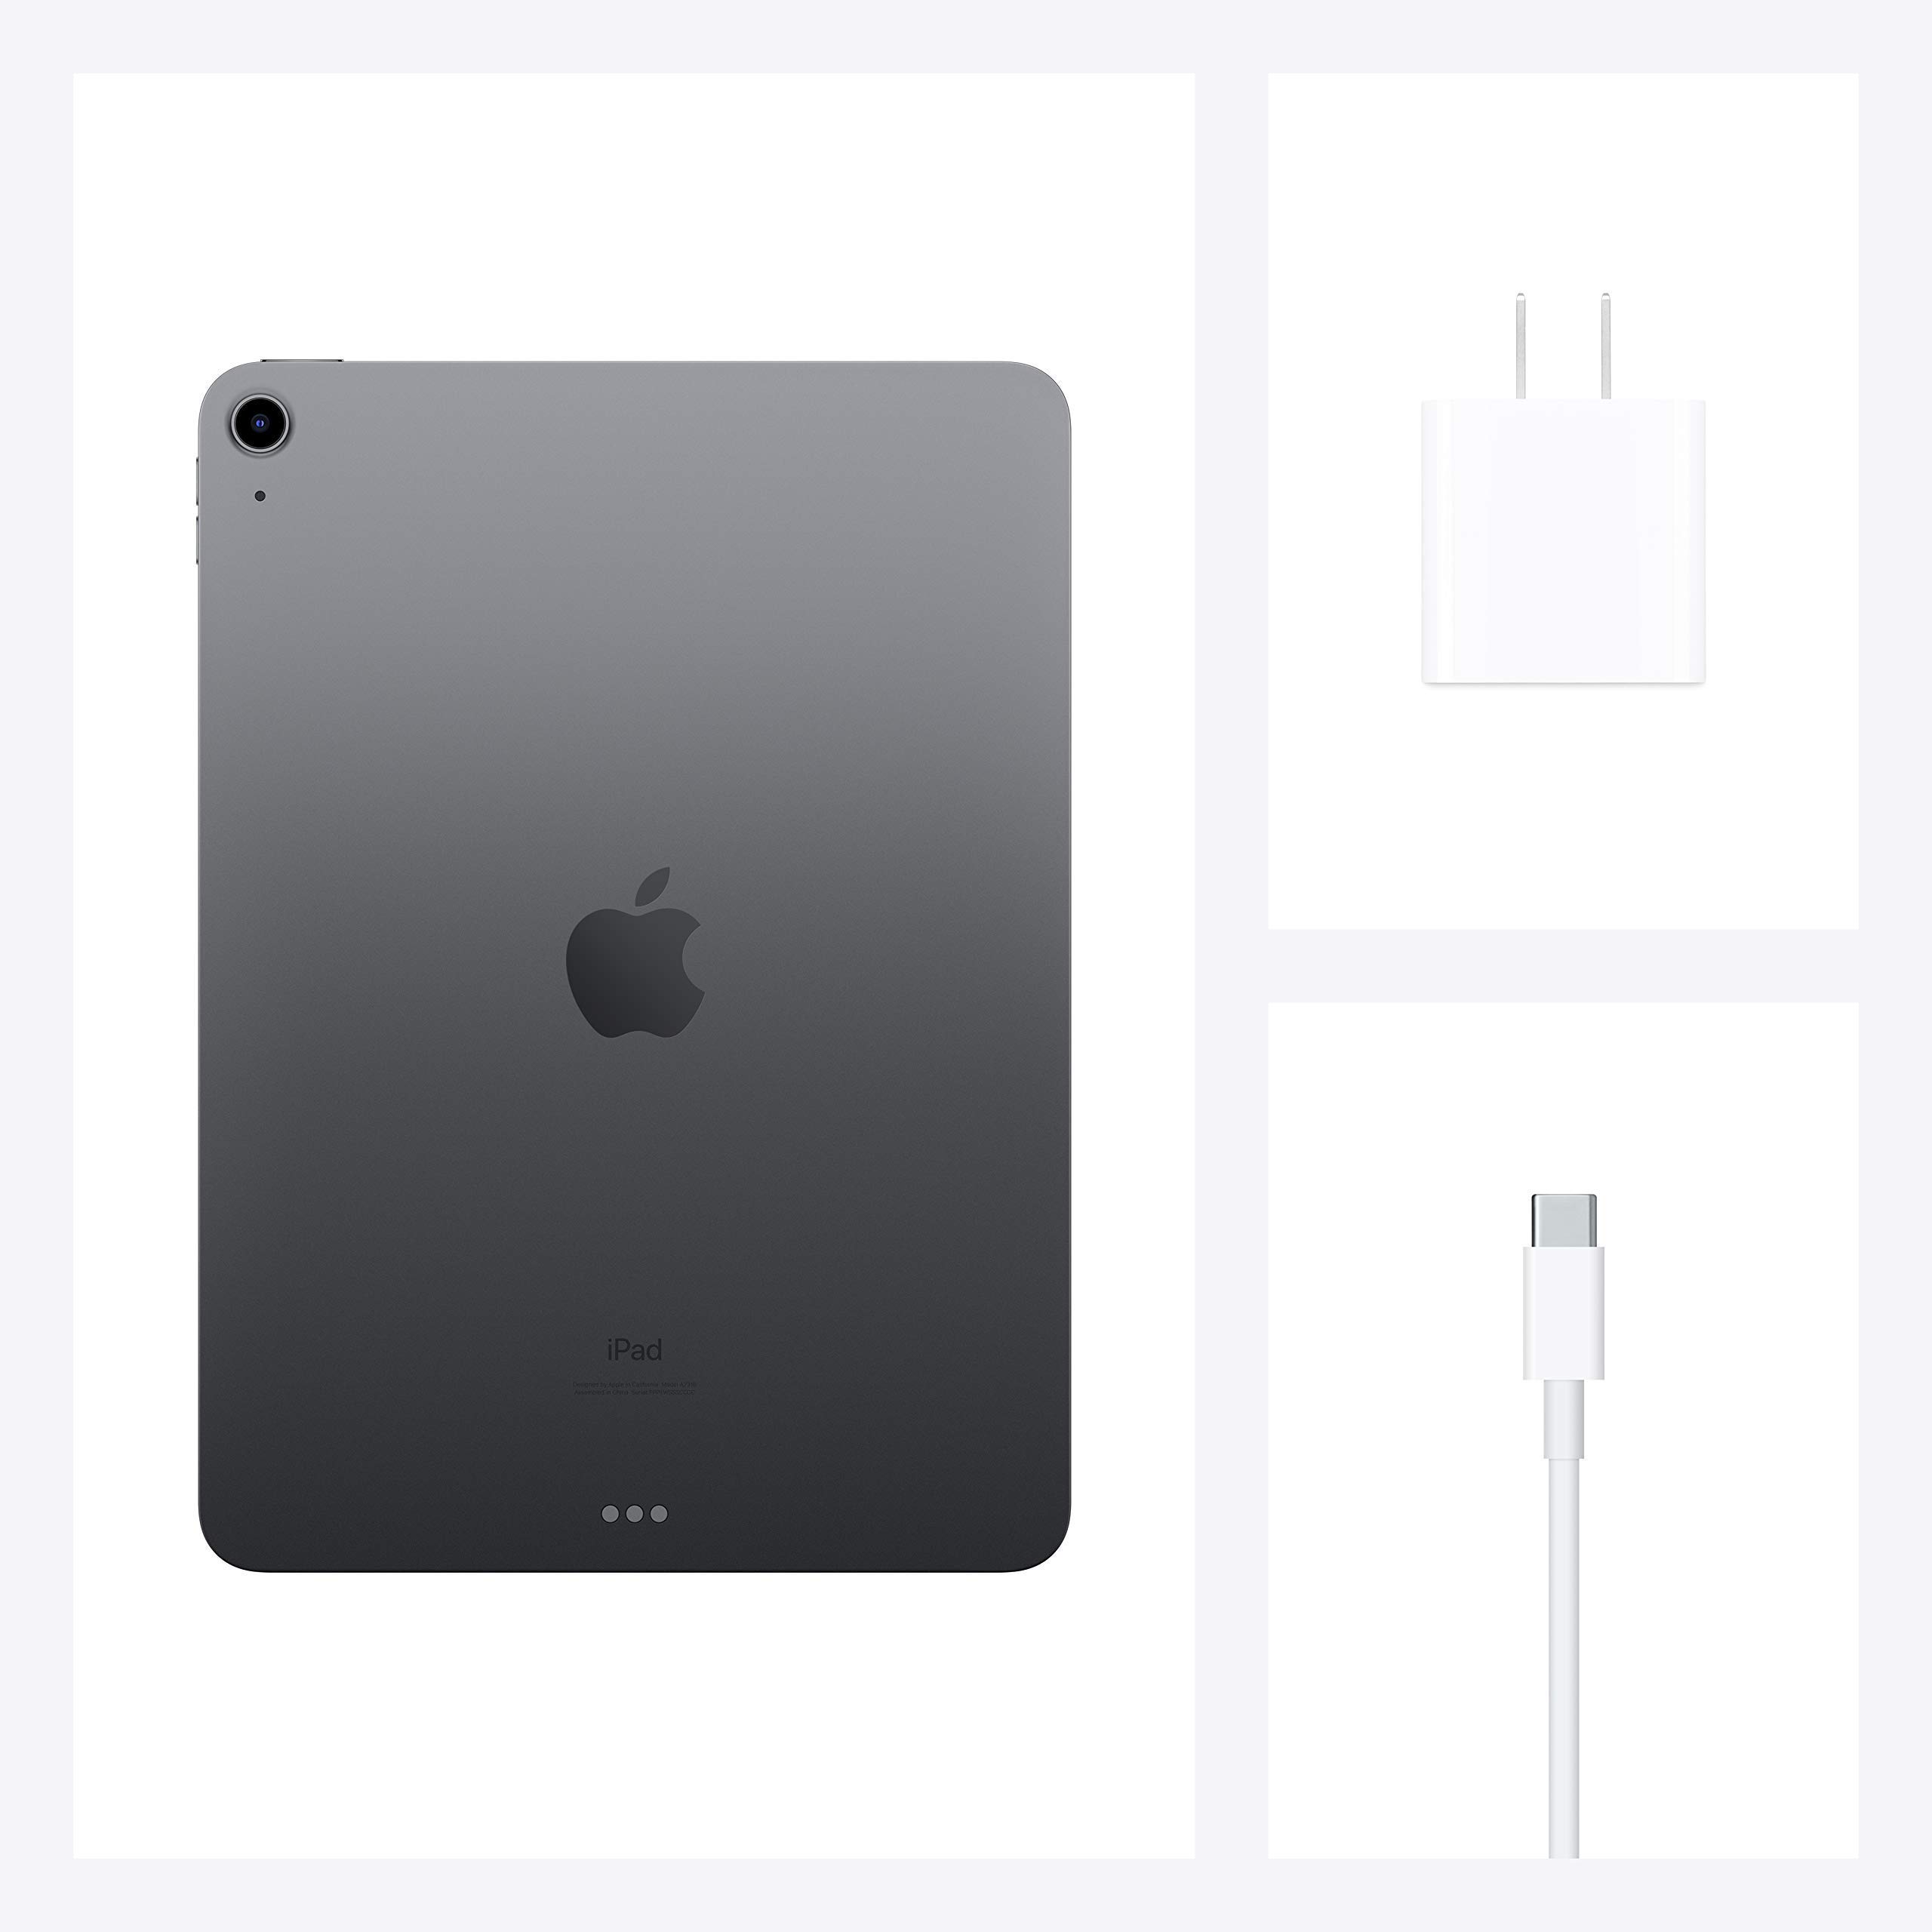 Apple iPad Air (10.9-inch, Wi-Fi, 64GB) - Space Gray (Latest Model, 4th Generation) (Renewed)